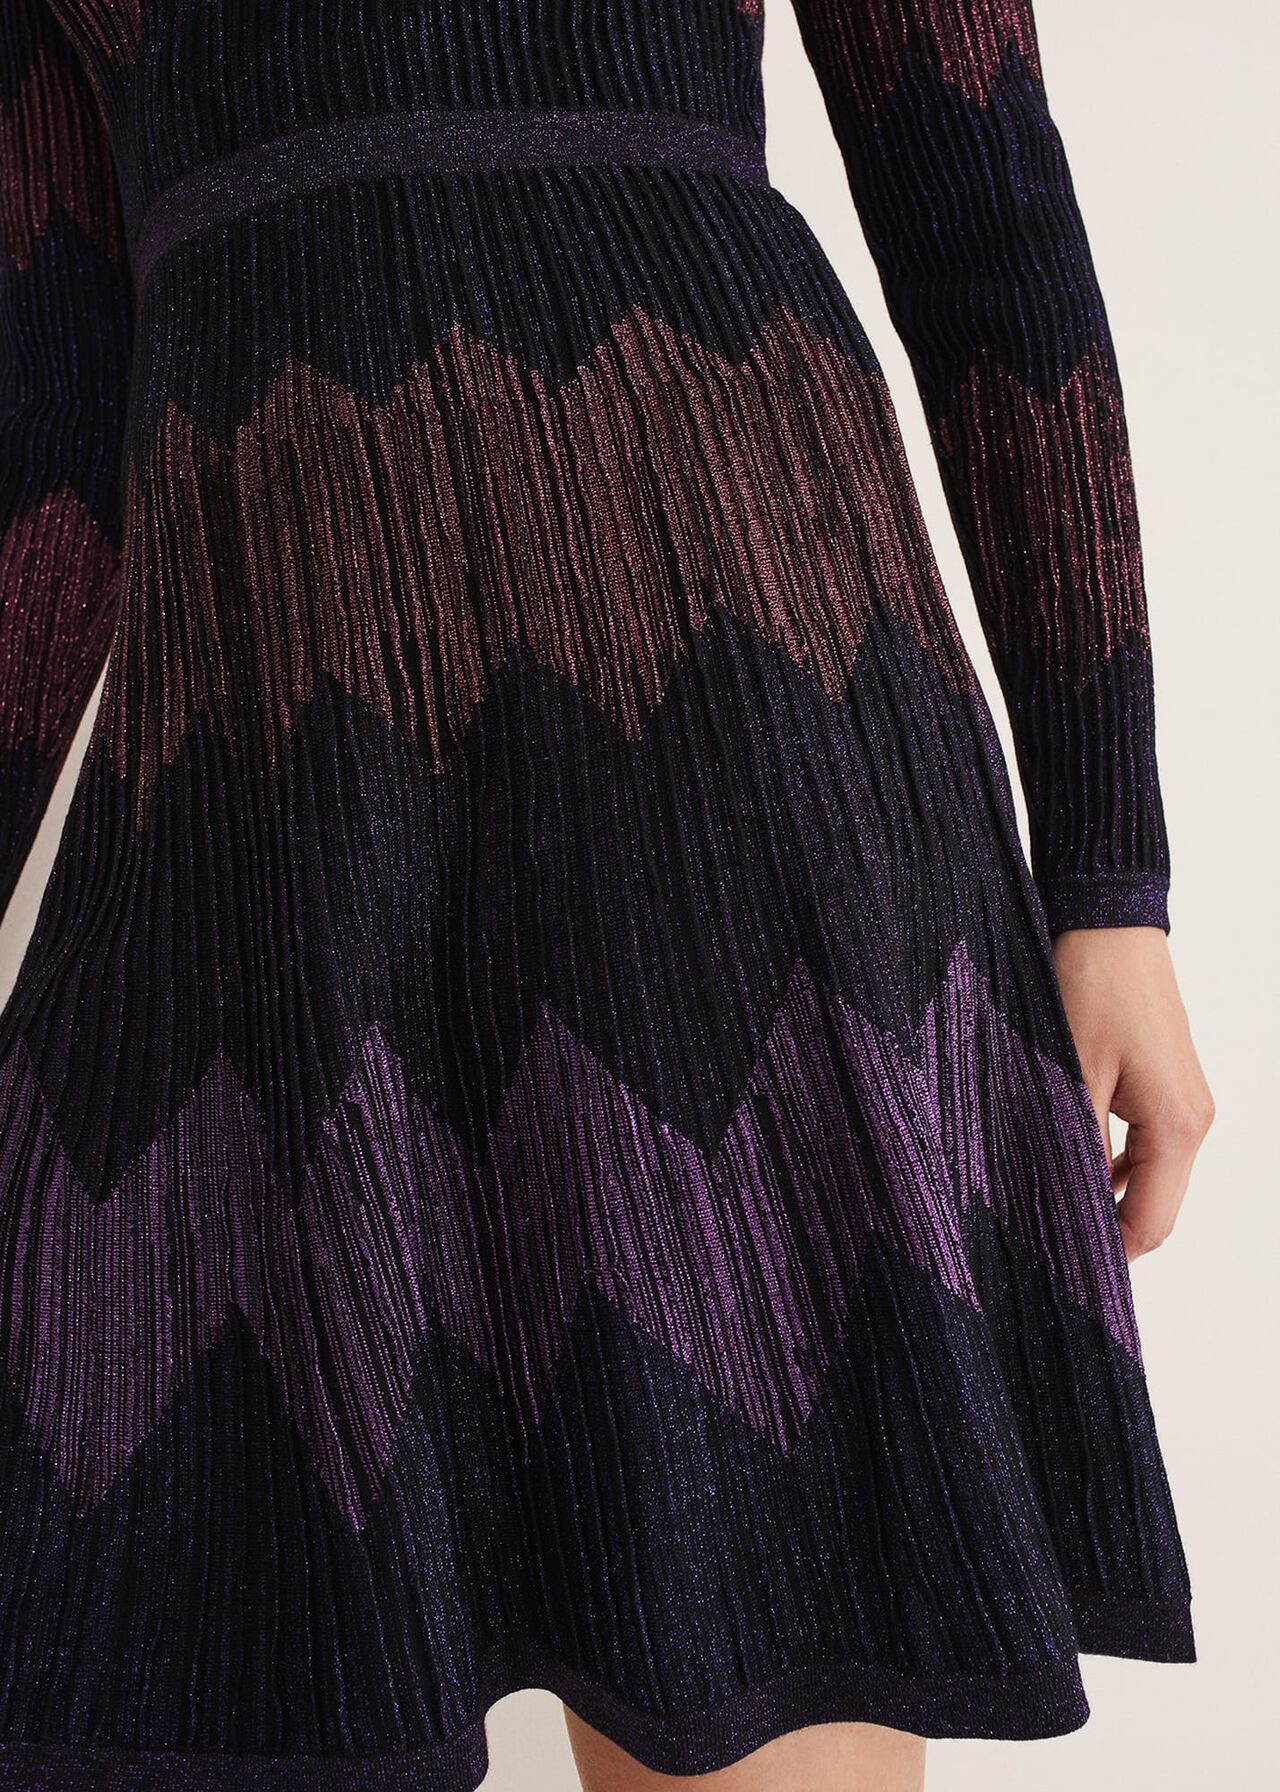 Enola Chevron Lurex Knitted Dress